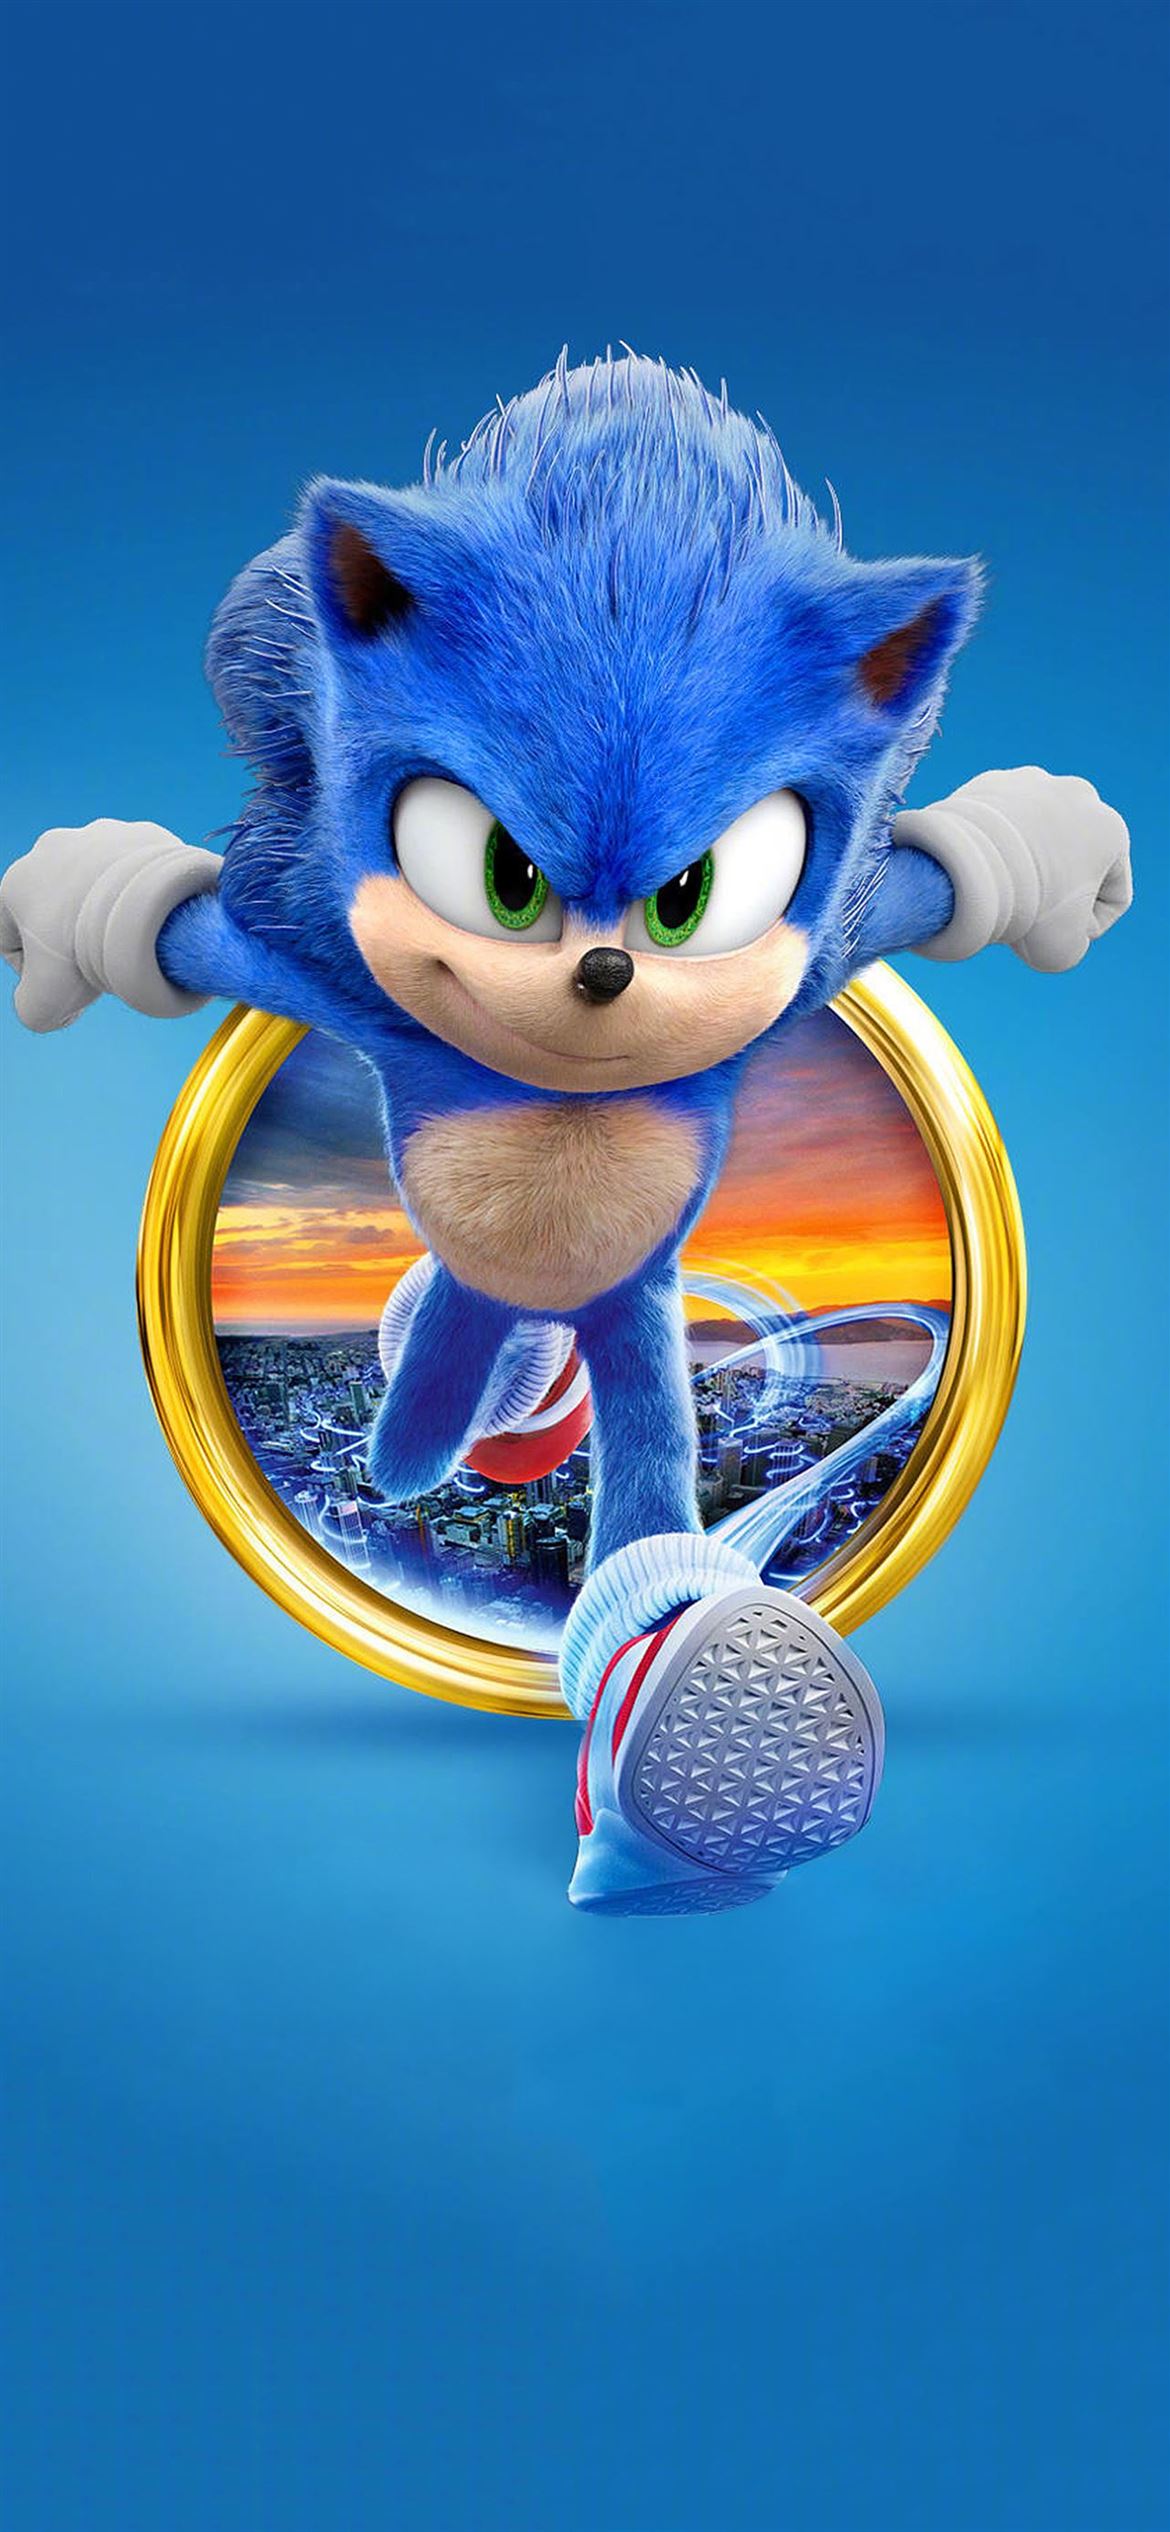 sonic the hedgehog 2020 4k iPhone 12 Wallpaper Free Download